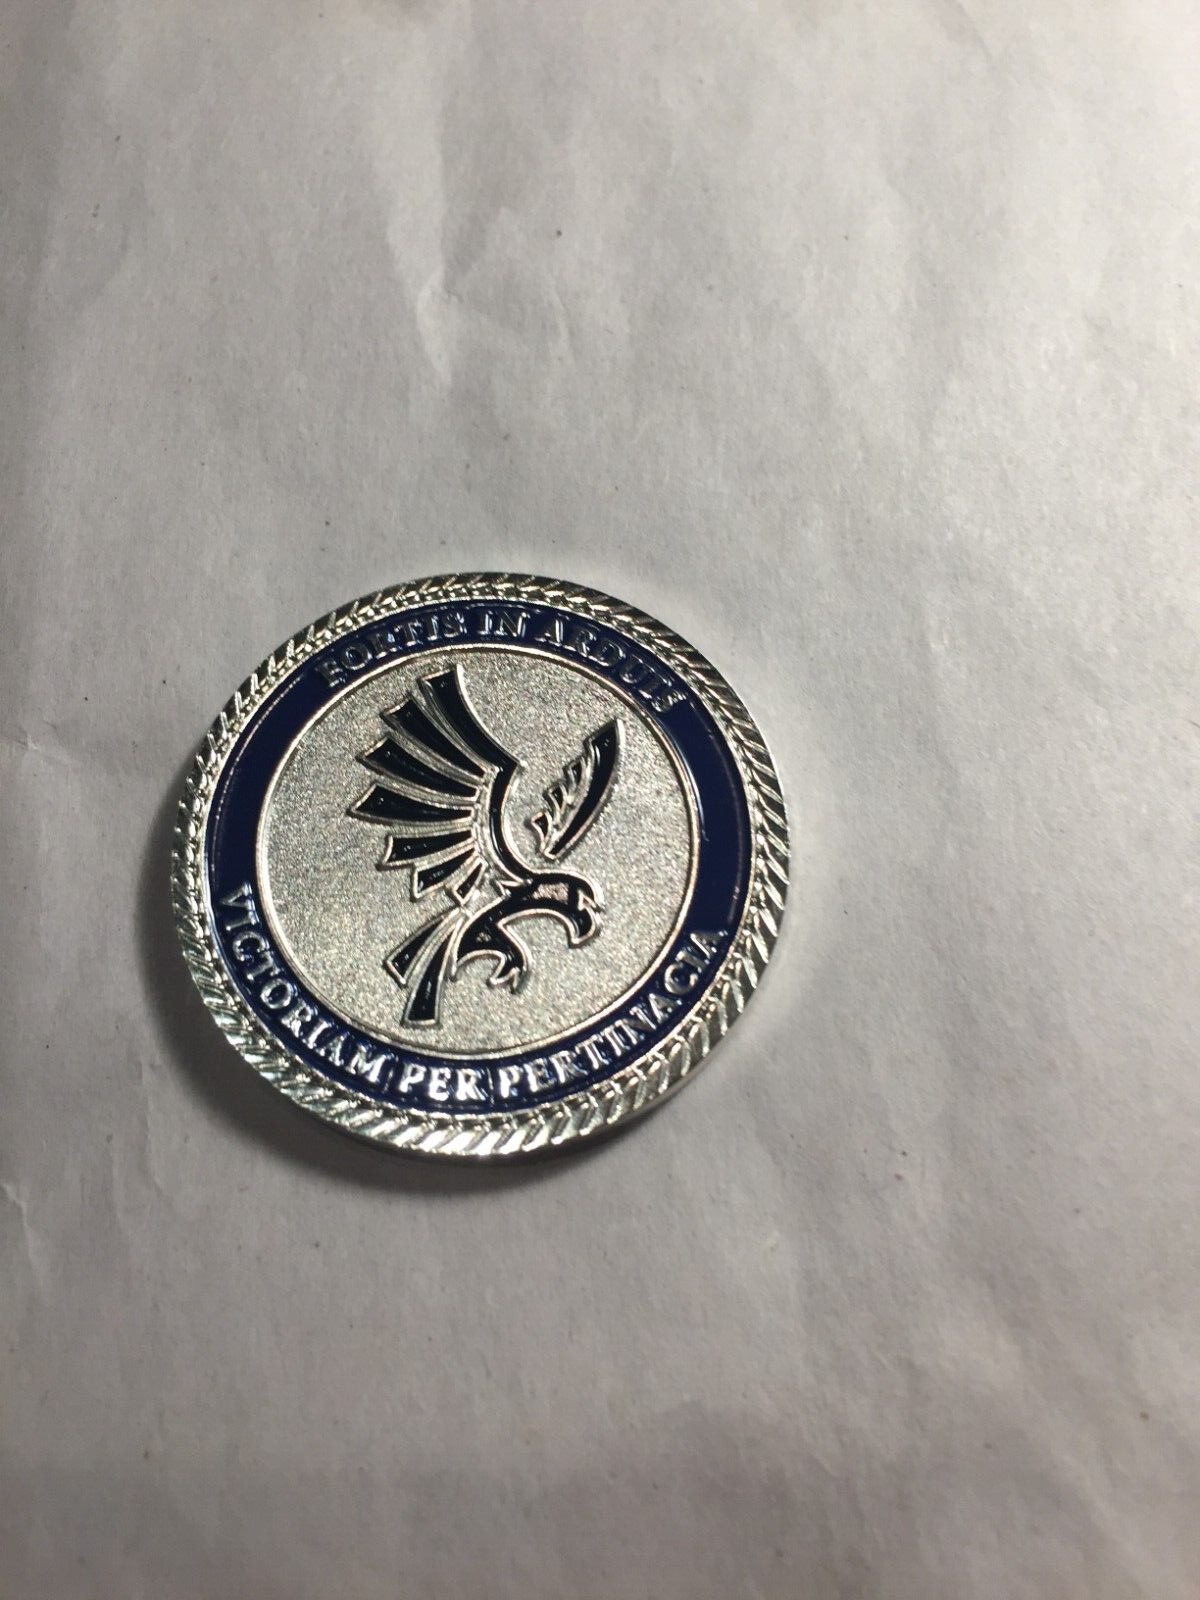 U S Air Force Challenge coin- 93 is Blackbird